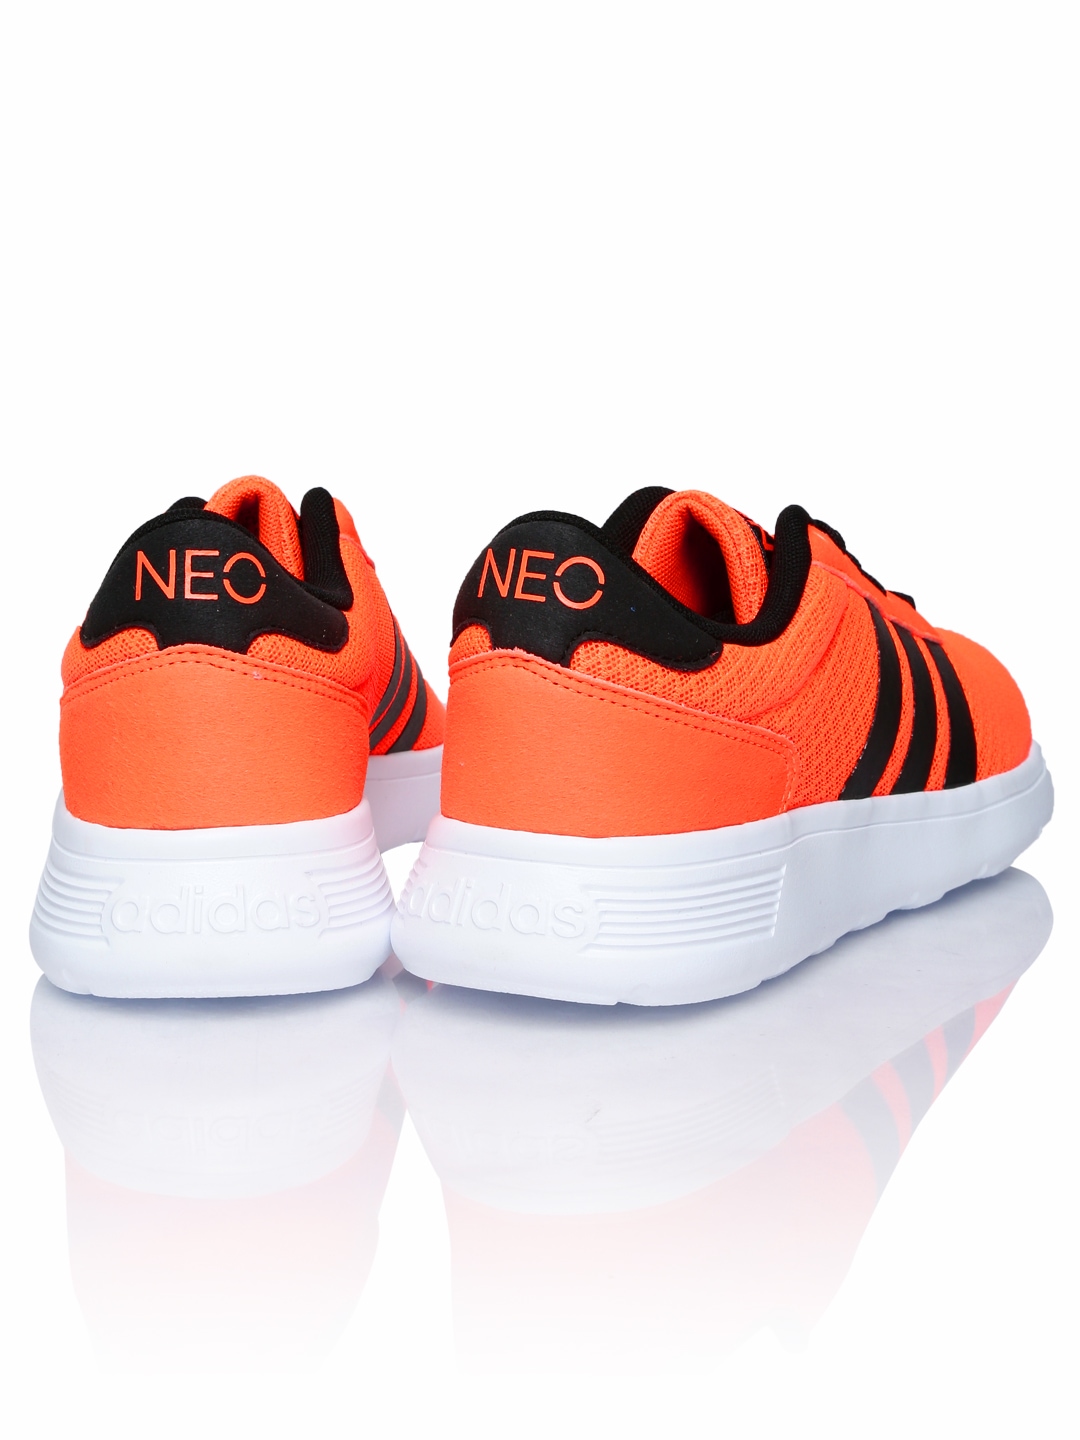 adidas neo shoes orange | K\u0026K Sound